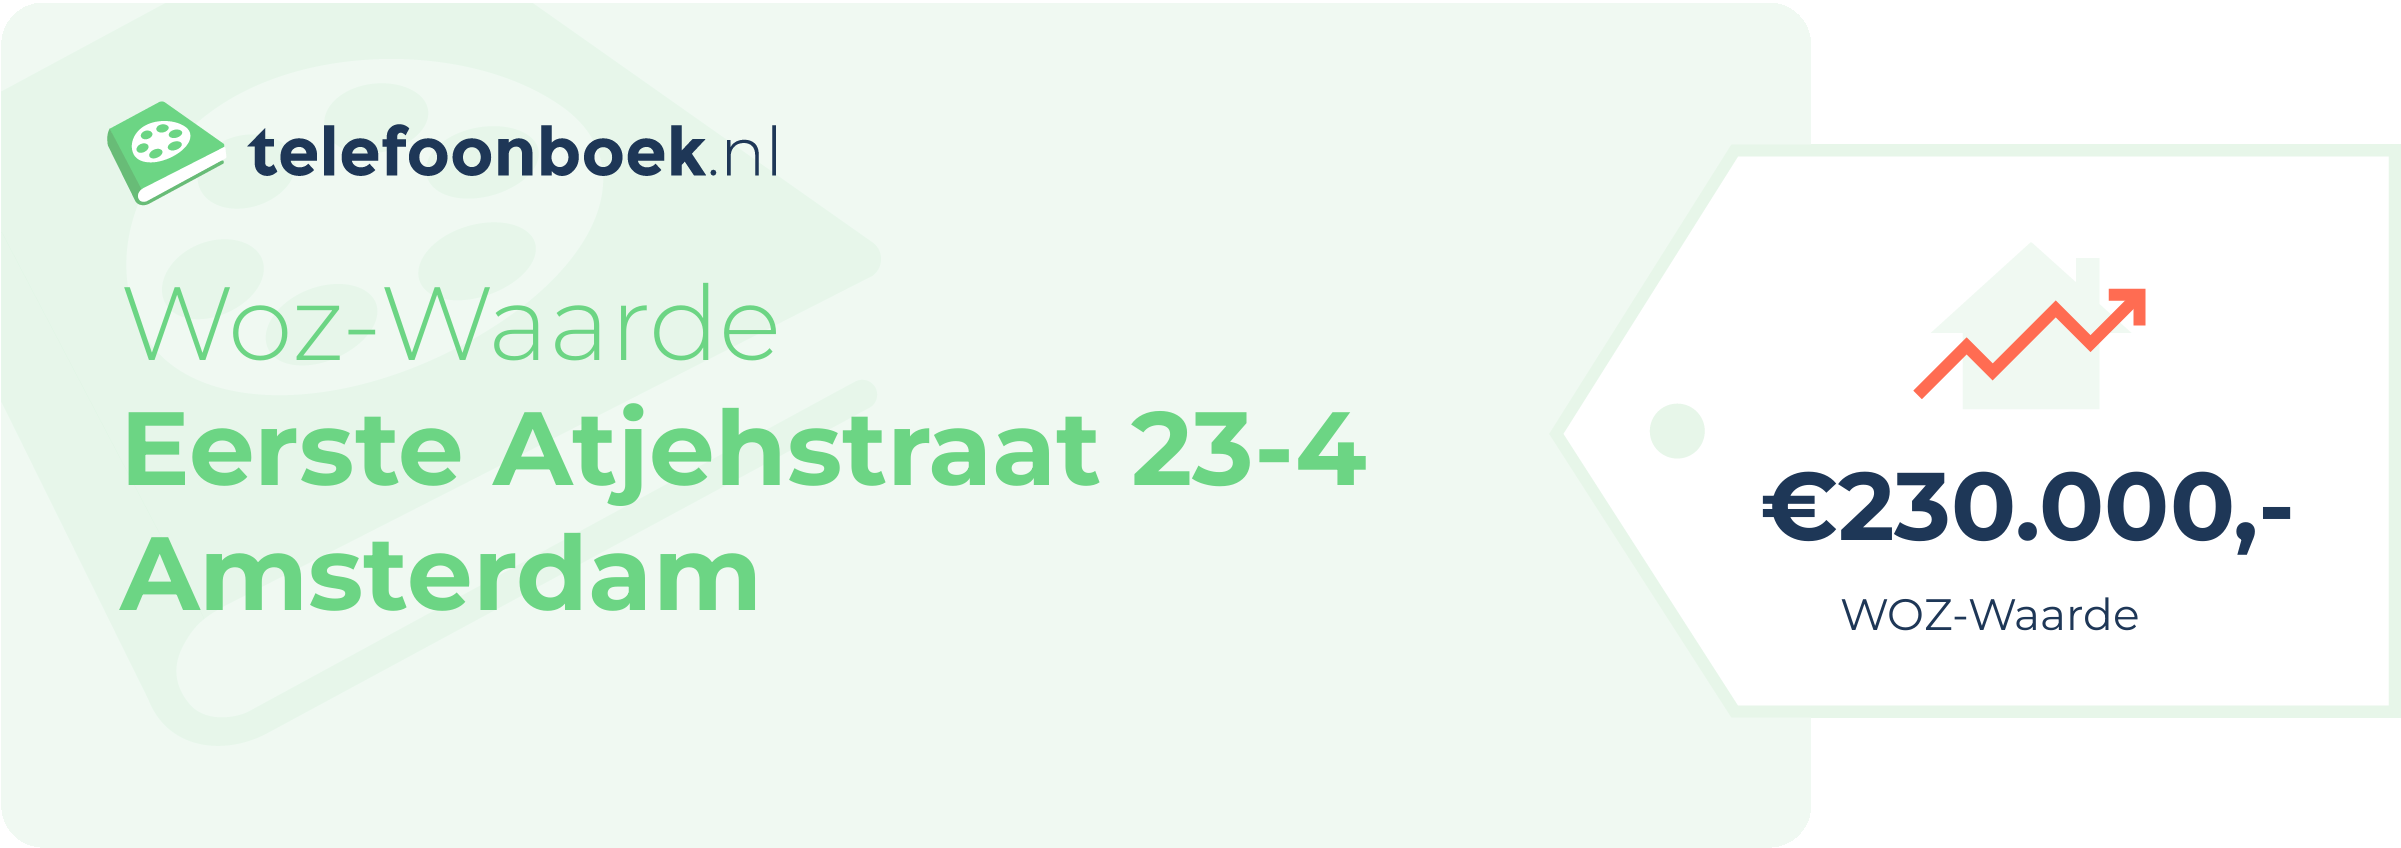 WOZ-waarde Eerste Atjehstraat 23-4 Amsterdam